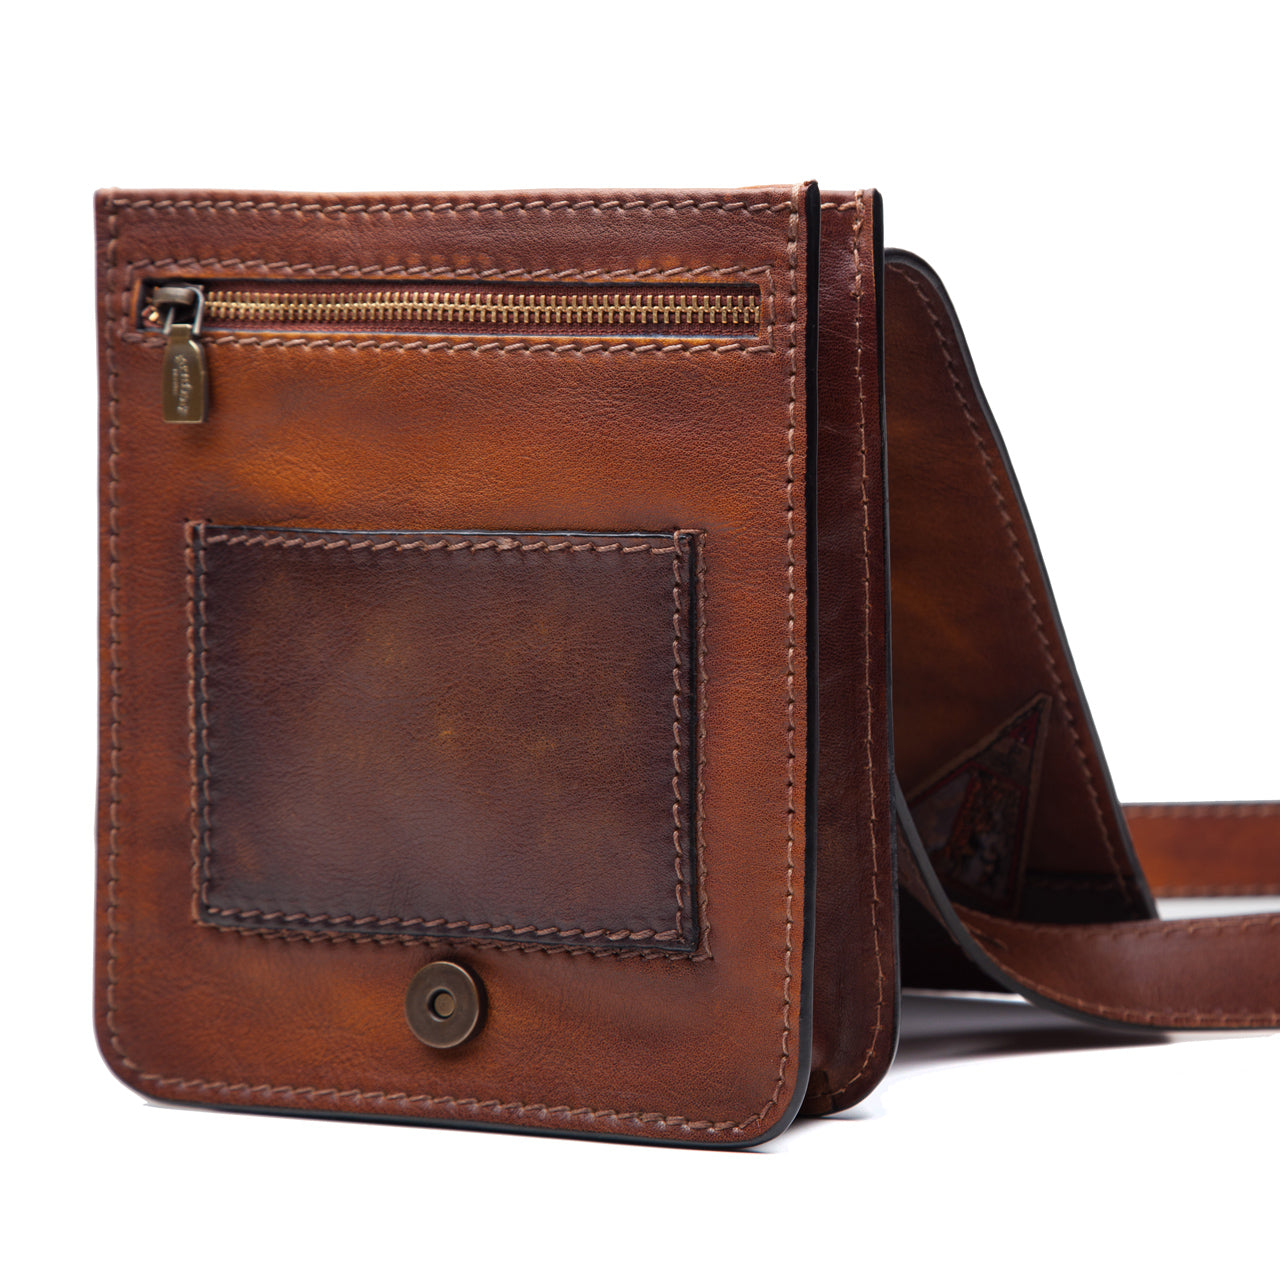 Pratesi Messanger Mini Bag in genuine Italian leather